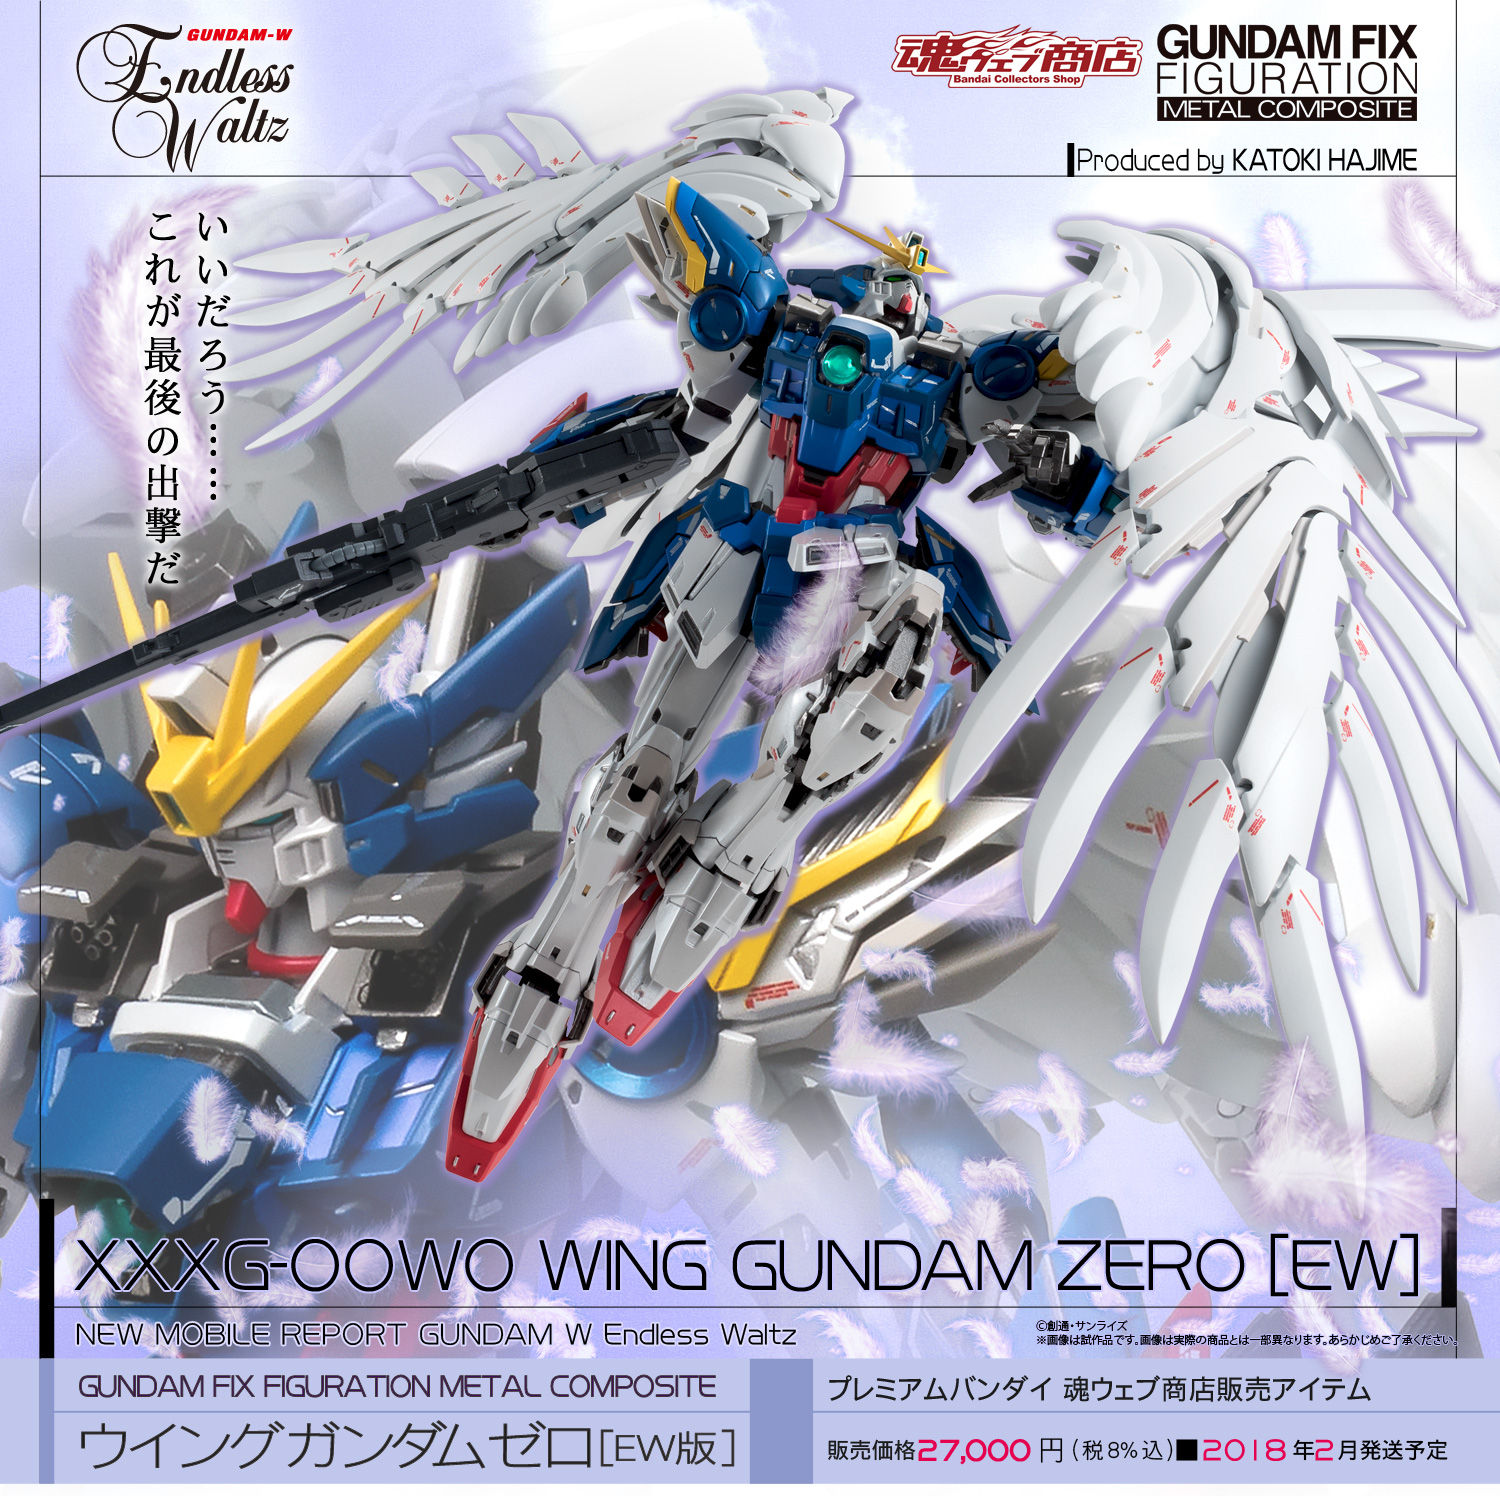 P Bandai Fix Figuration Metal Composite Wing Gundam Zero Ew Custom Full Official Images Info Release Gunjap